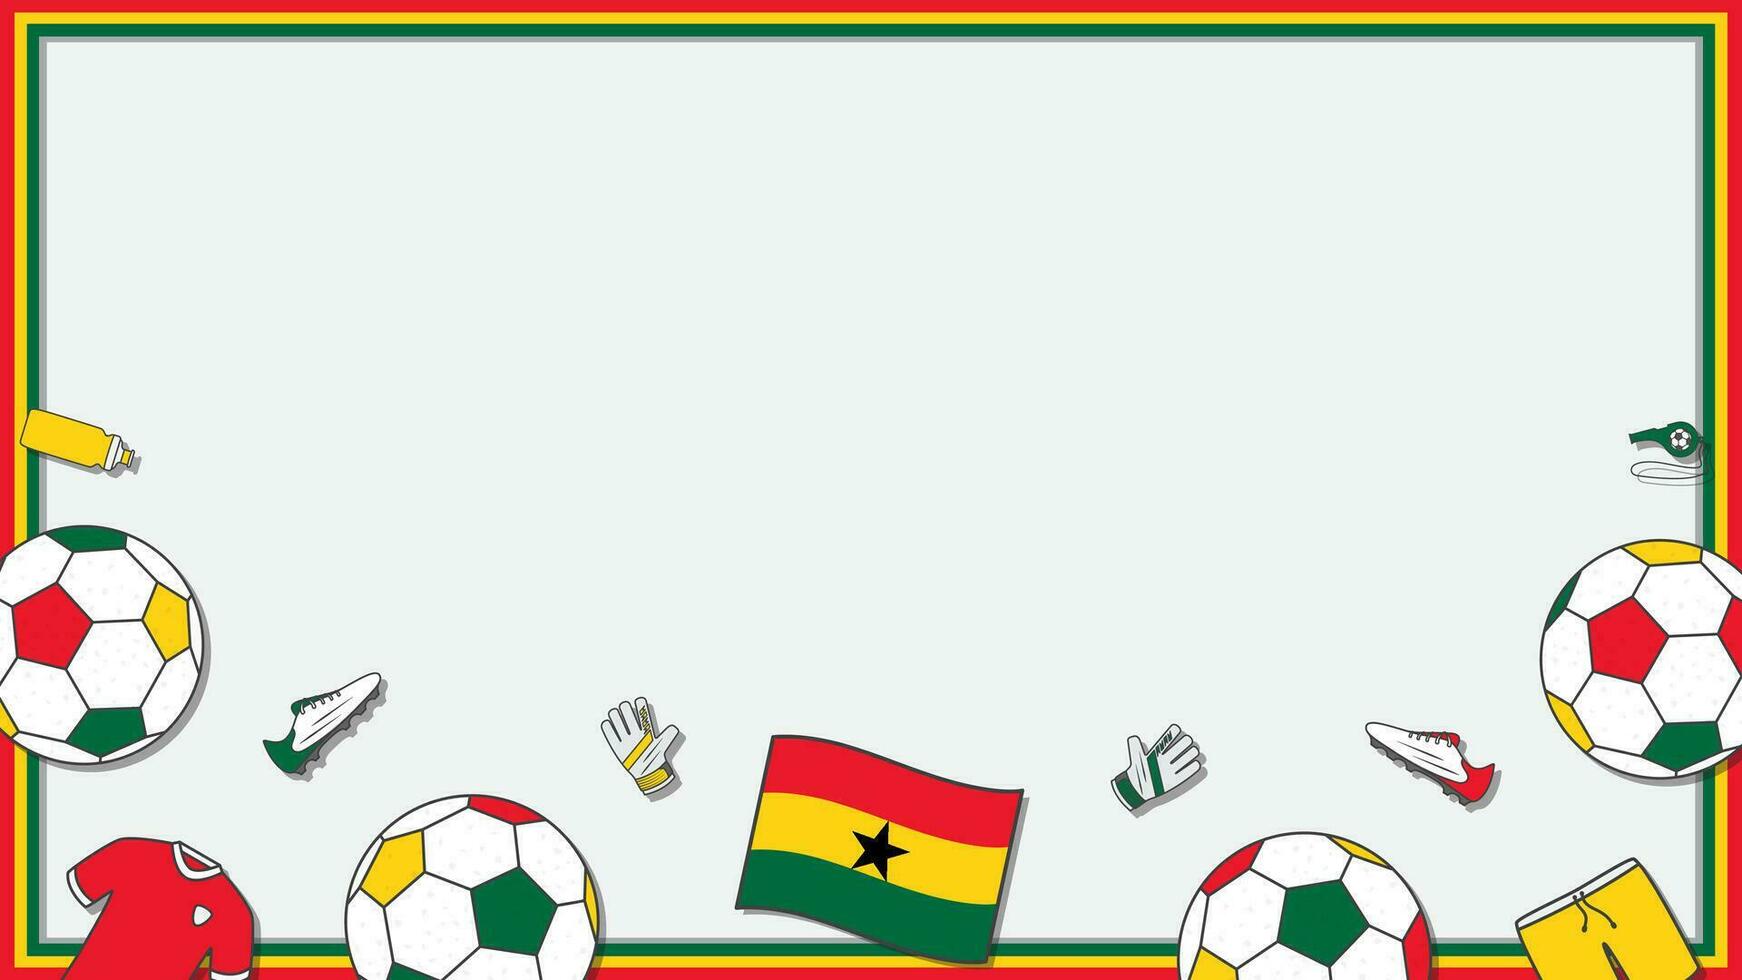 Football Background Design Template. Football Cartoon Vector Illustration. Soccer In Ghana